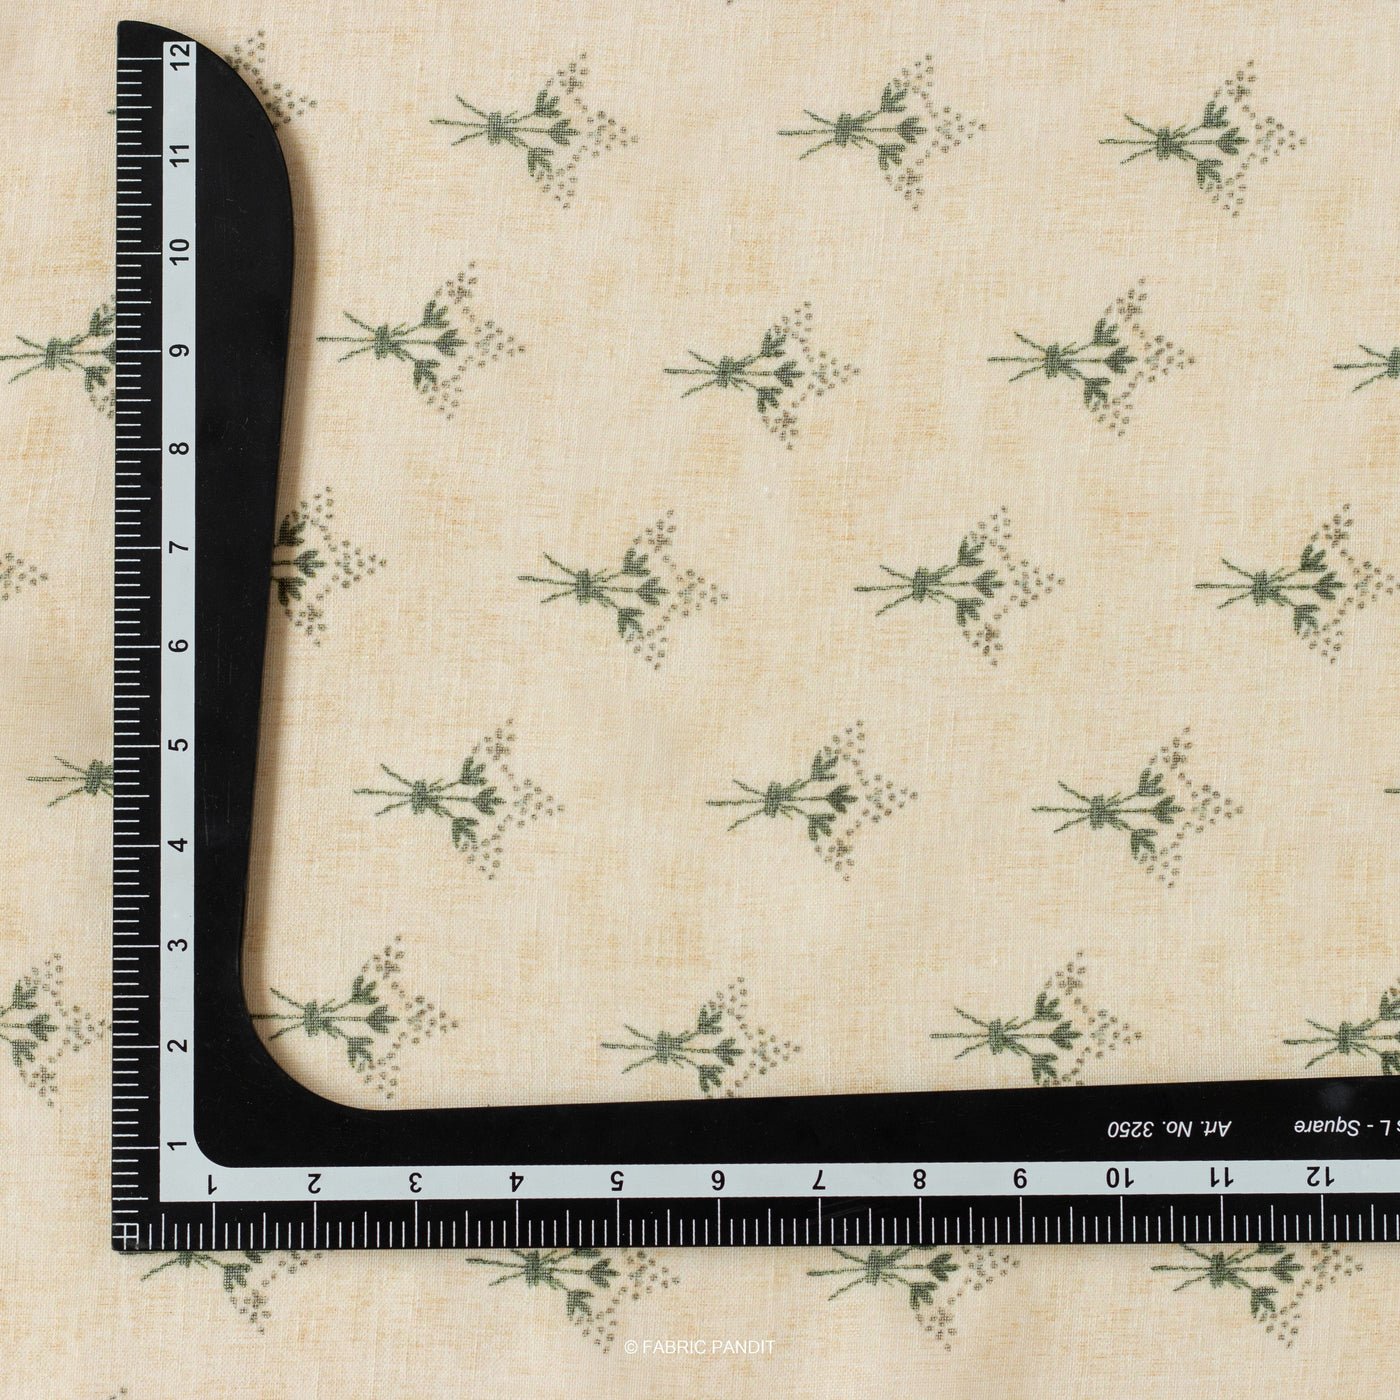 Fabric Pandit Cut Piece 0.50M (CUT PIECE) Beige And Green Flower Bunch Digital Printed Linen Neps Fabric (Width 44 Inches)